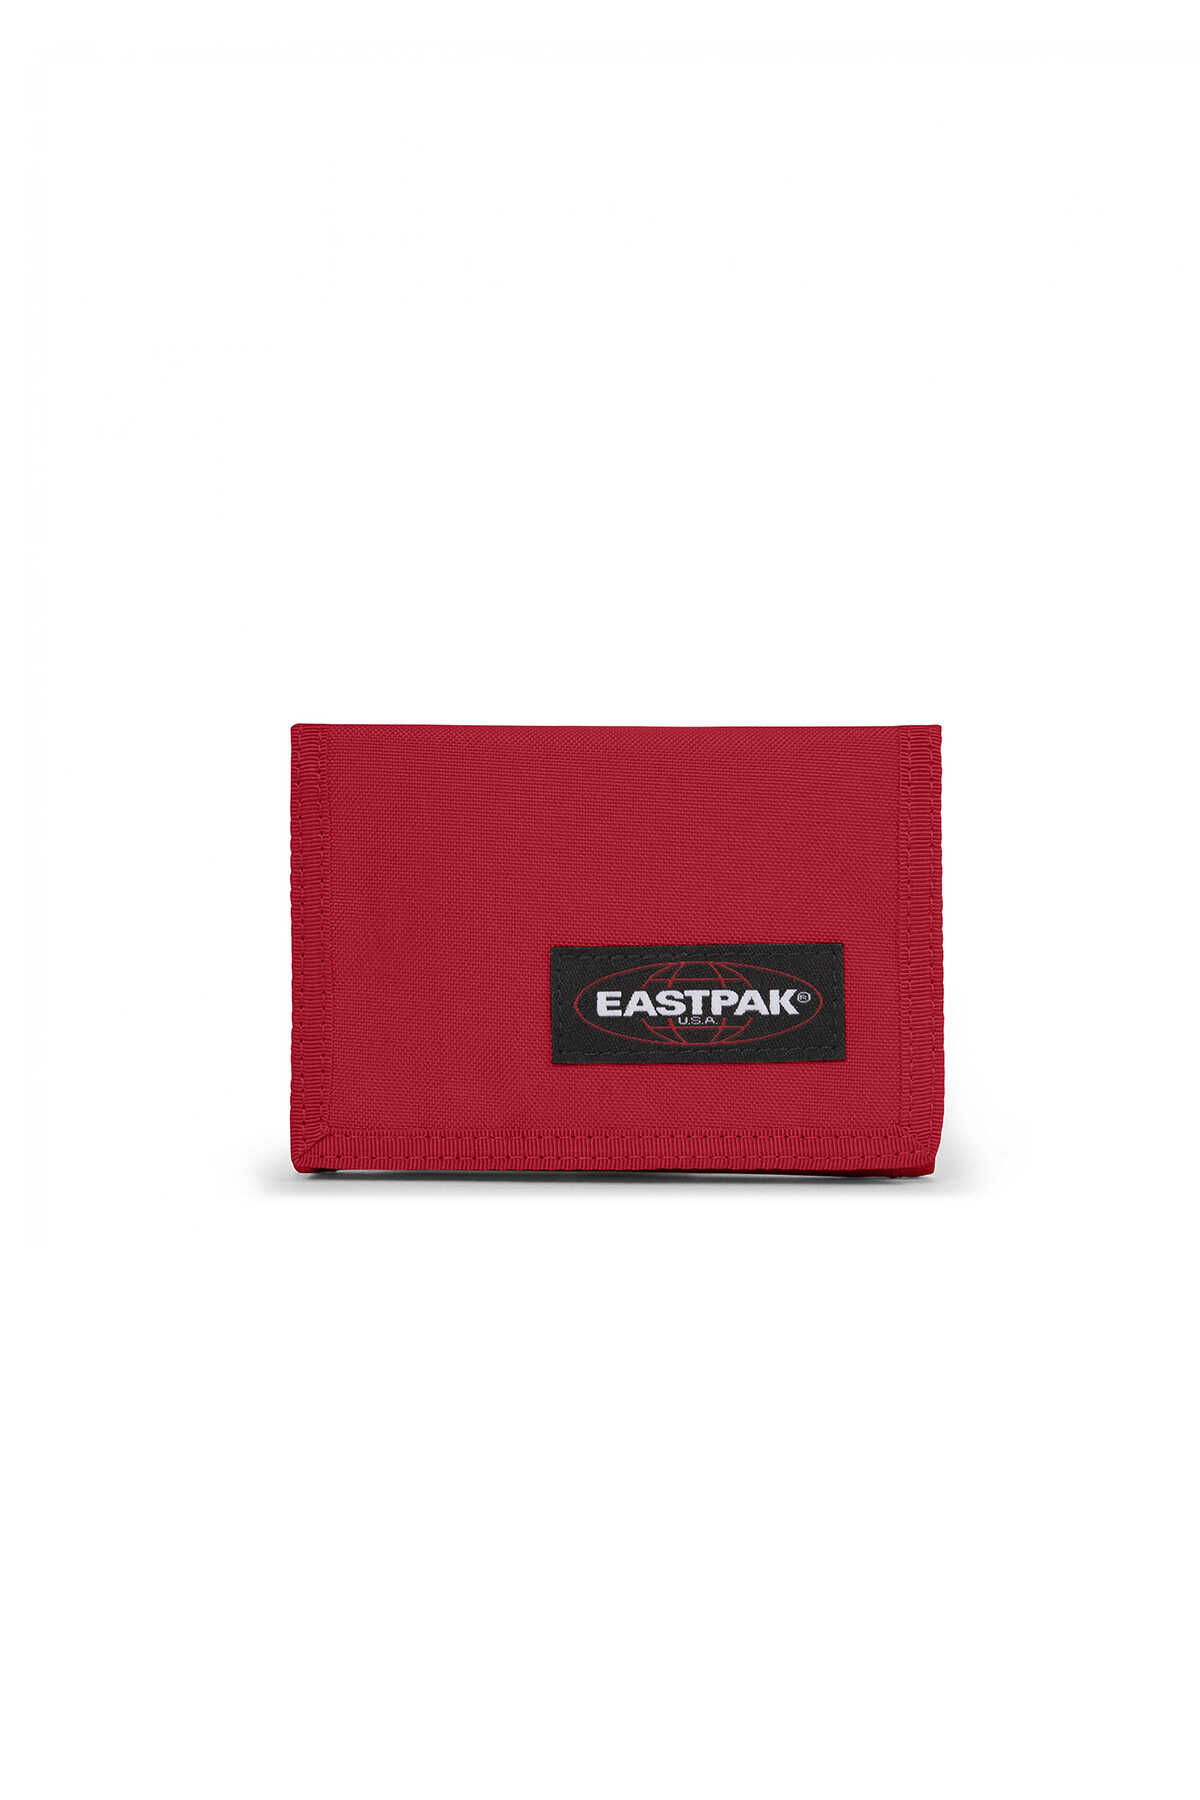 Eastpak - Eastpak CREW SINGLE Unisex Cüzdan Scarlet Red